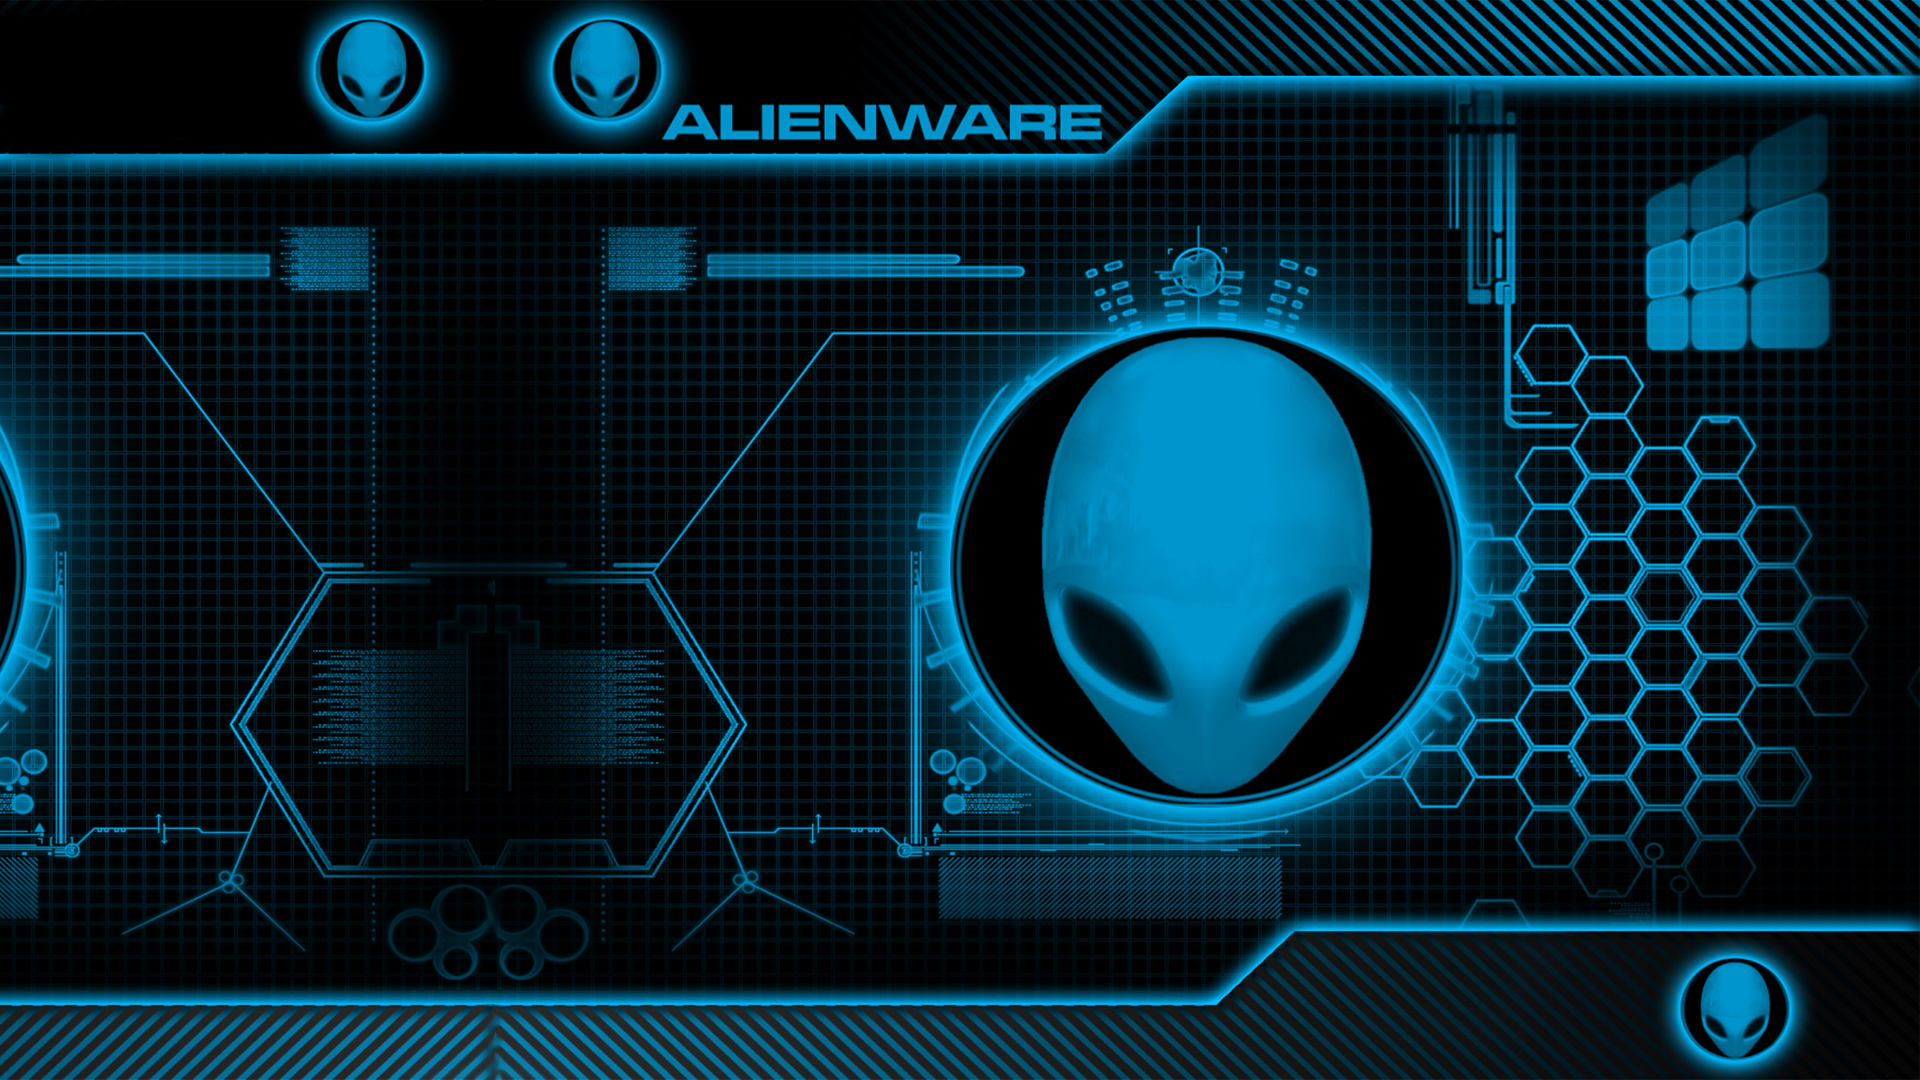 Alienware Blue theme for Windows Requirement Windows